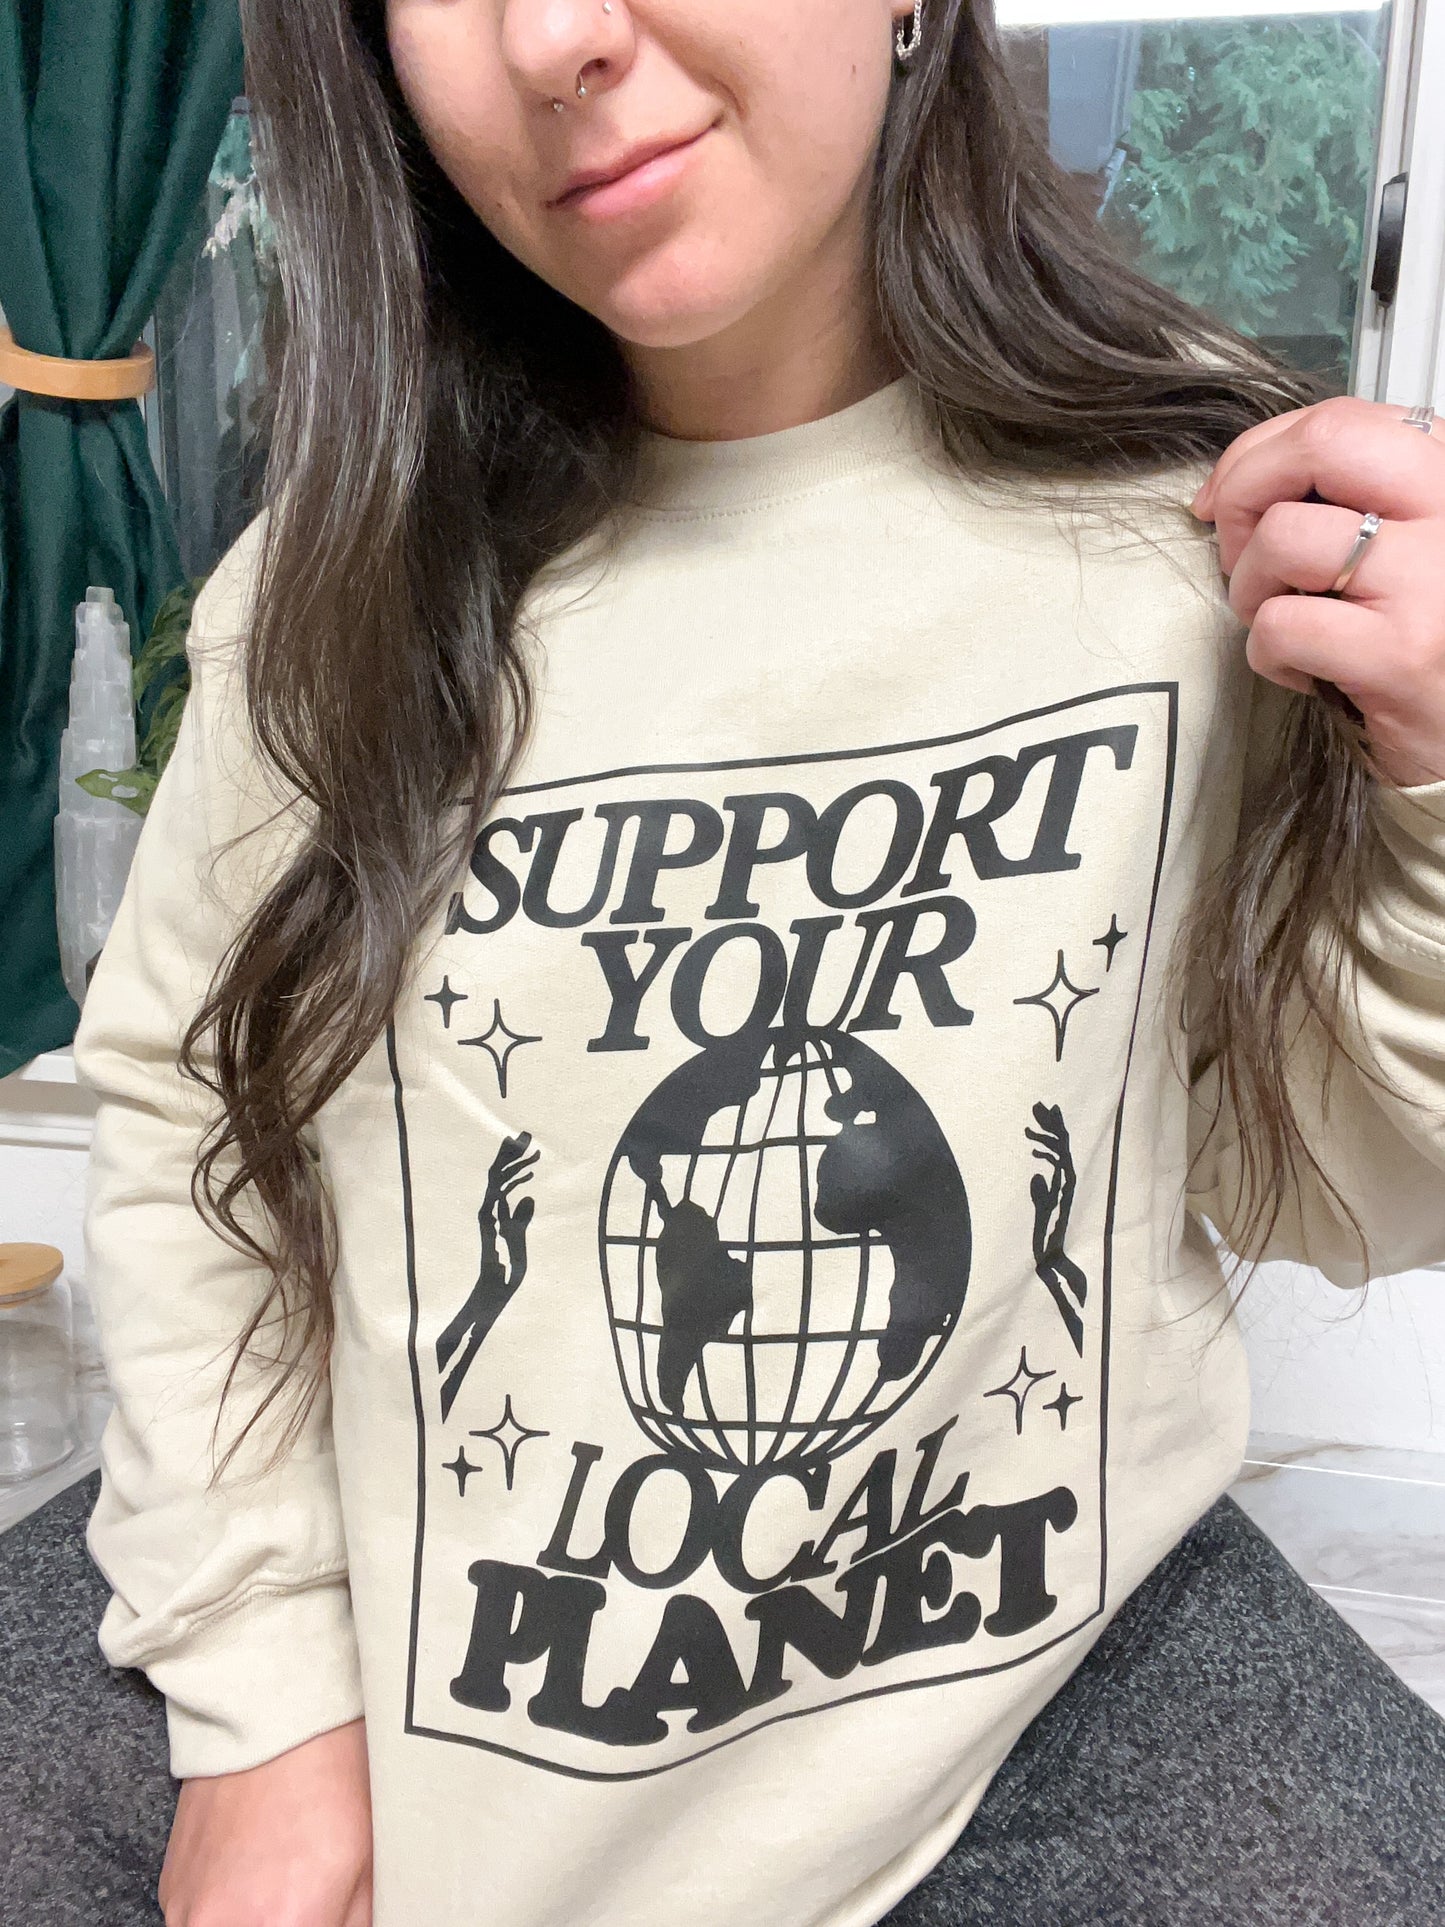 Support Your Local Planet Crewneck Sweatshirt